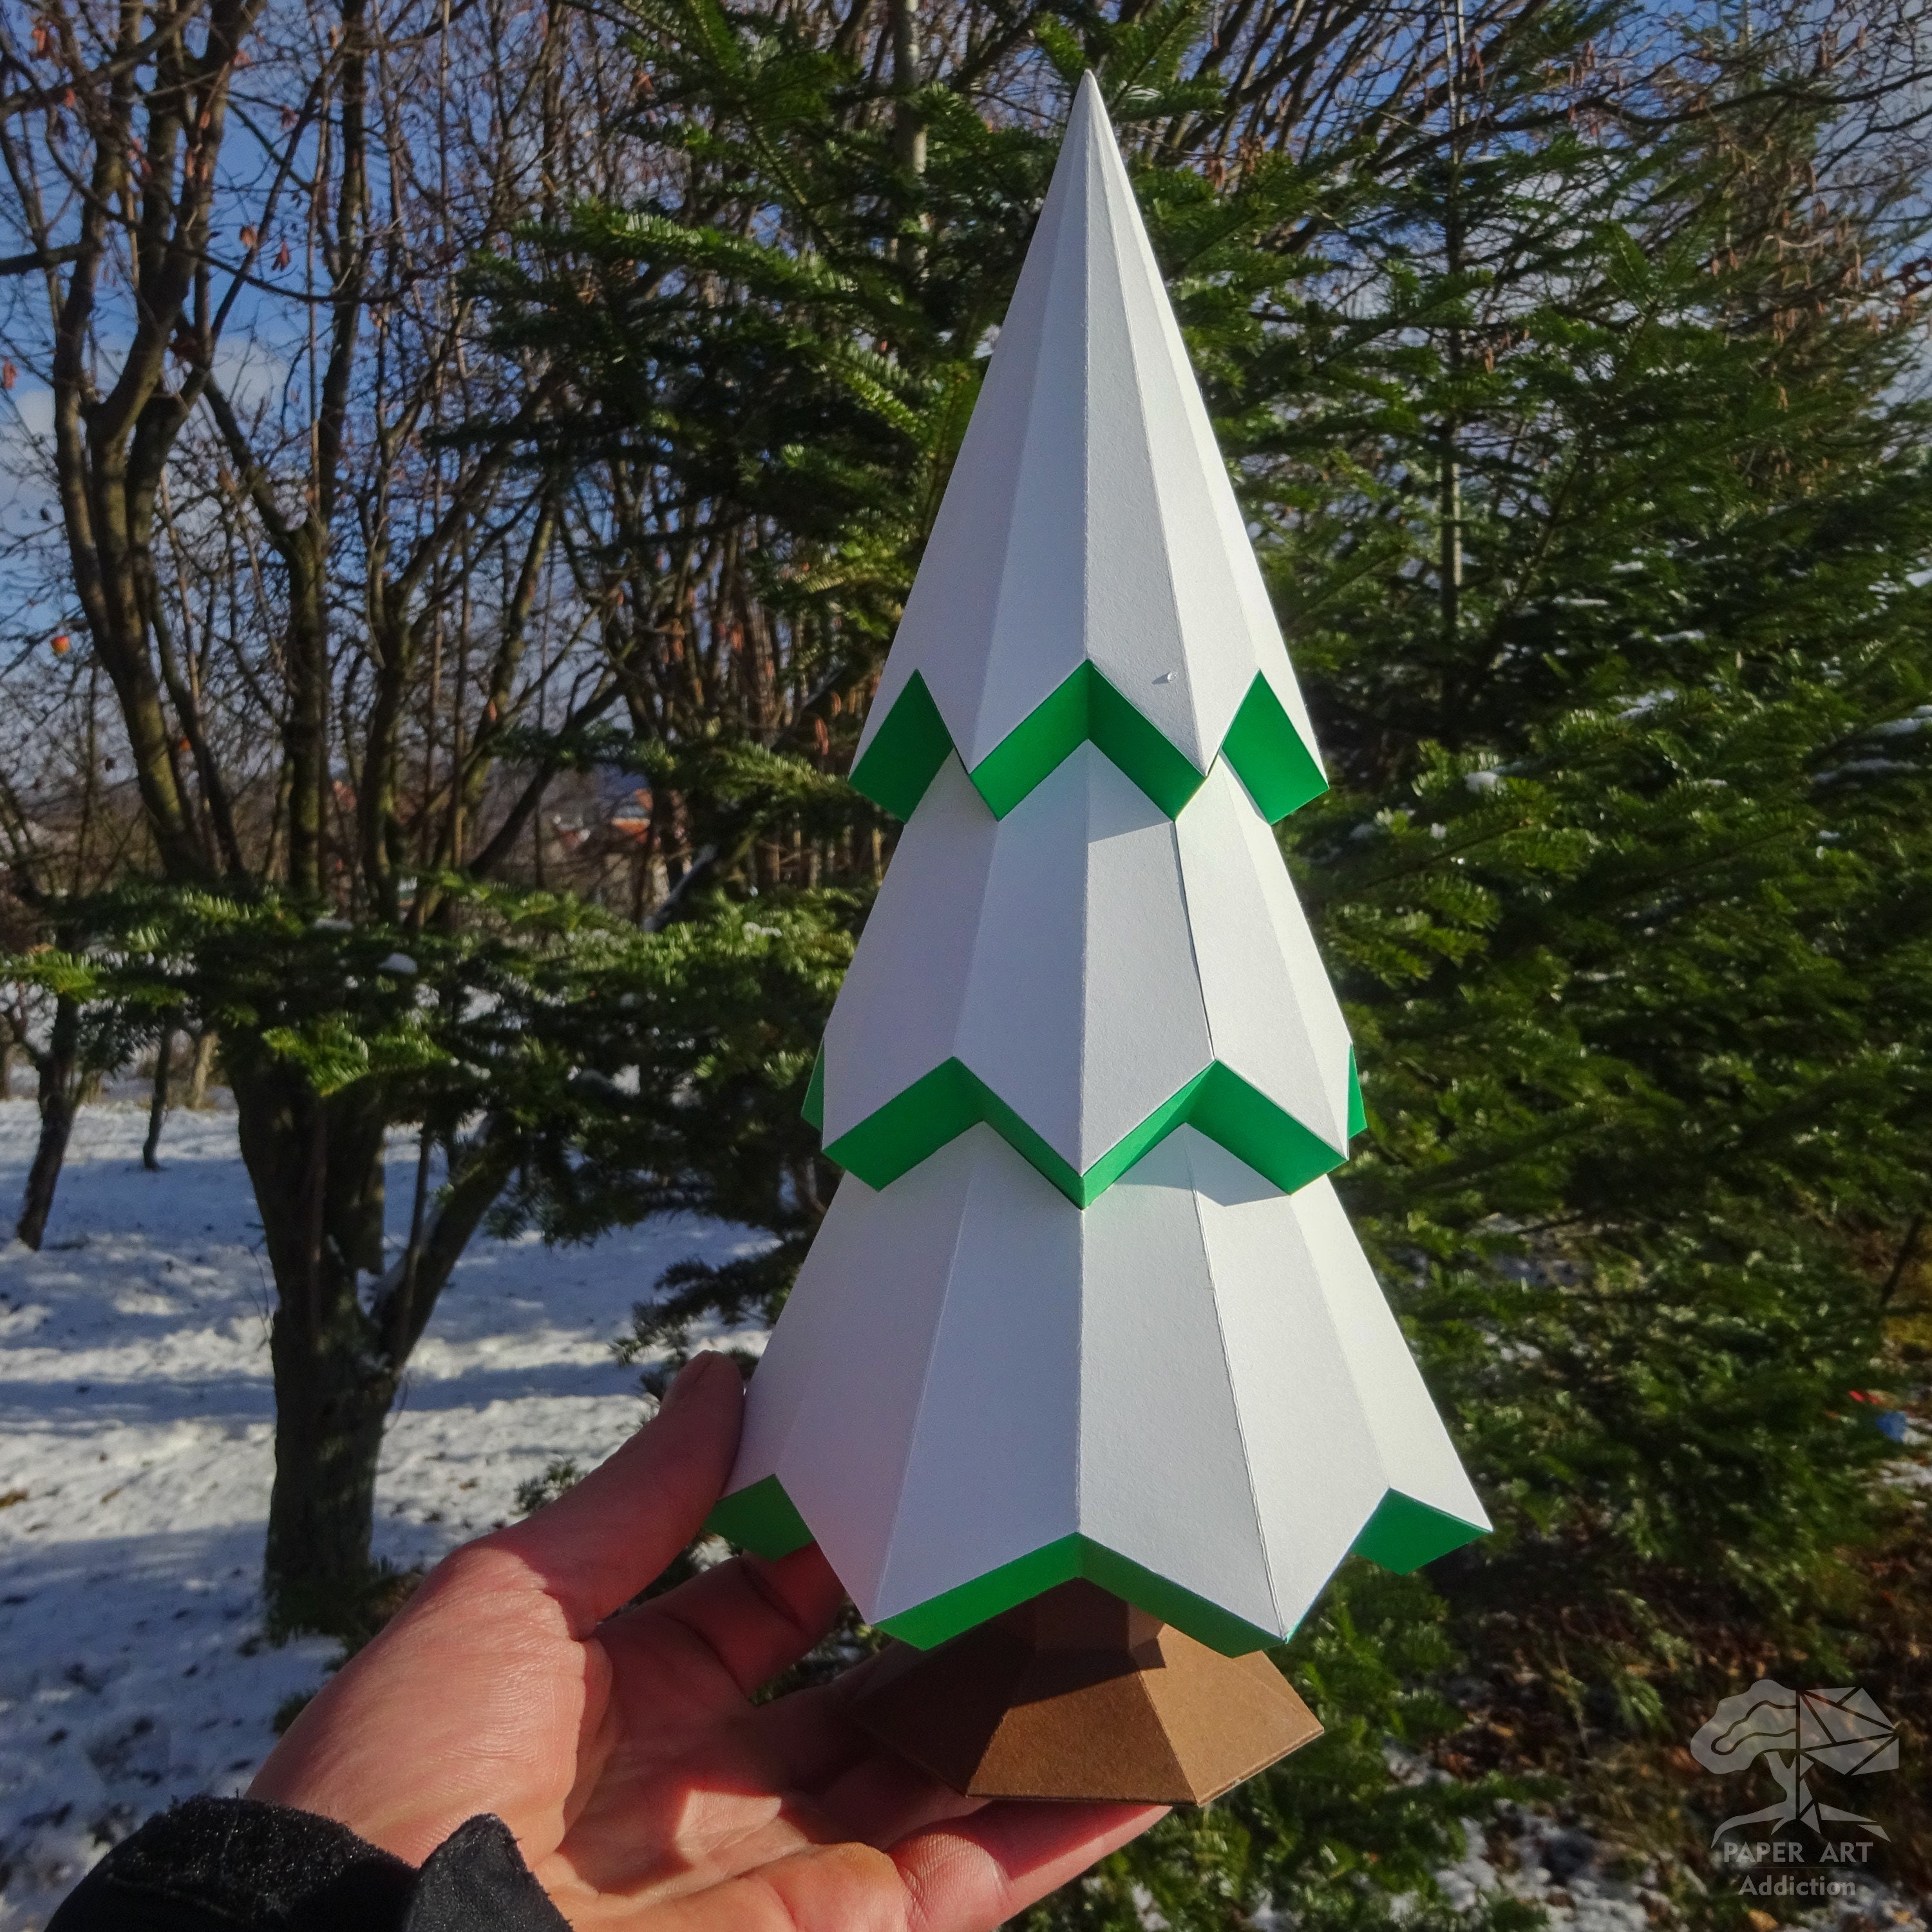 How to Make a 3D Christmas Tree —